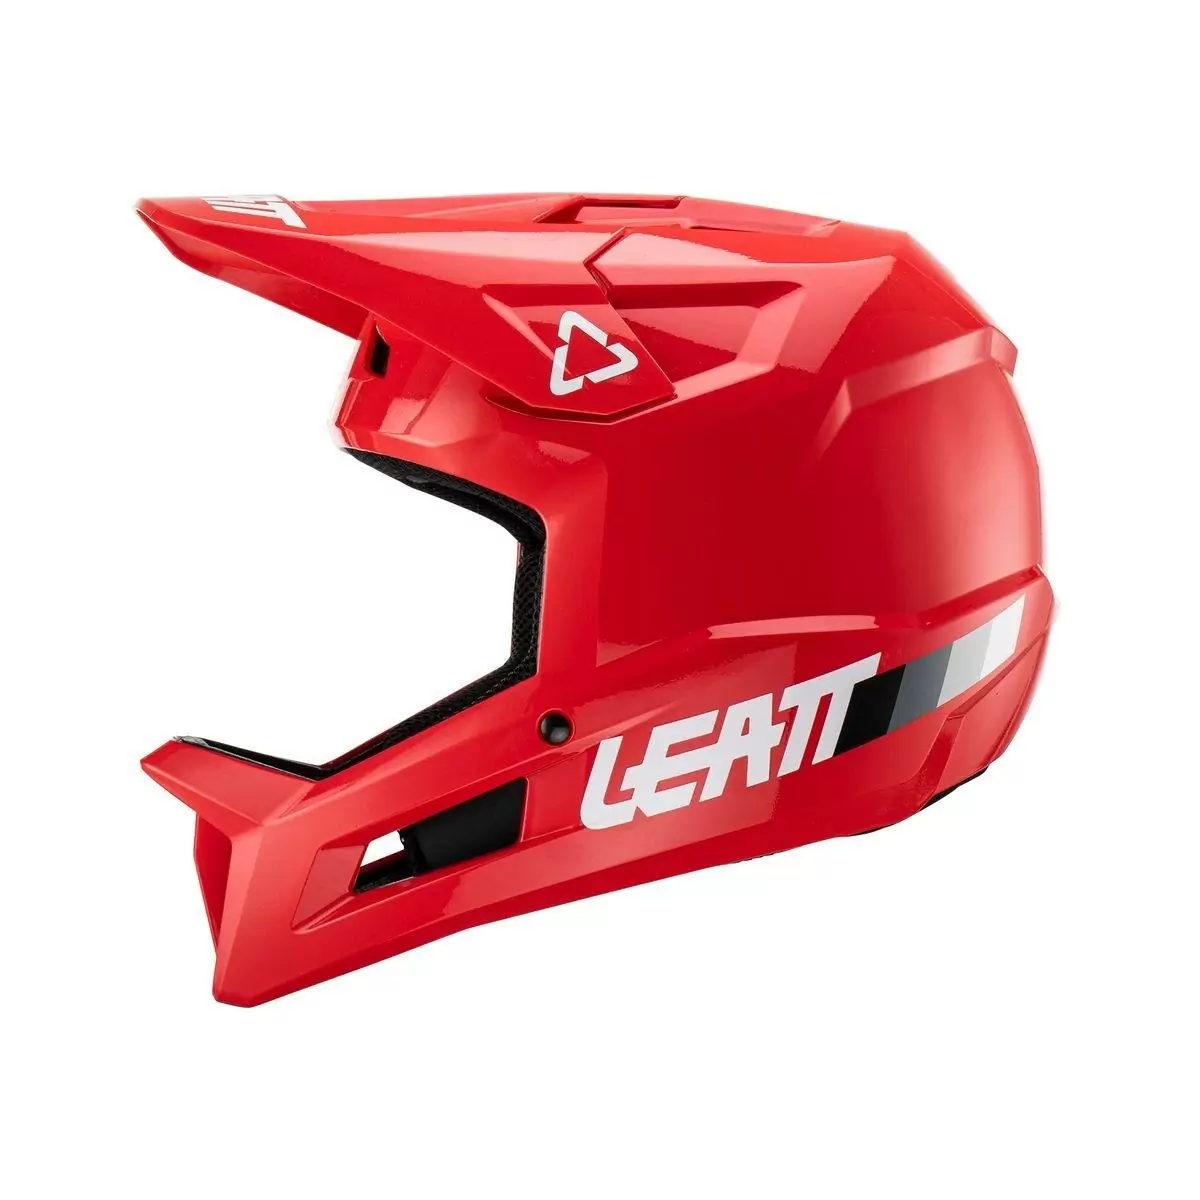 Gravity 1.0 Kids MTB Fullface Helmet Red Size XXS (51-52cm) #1